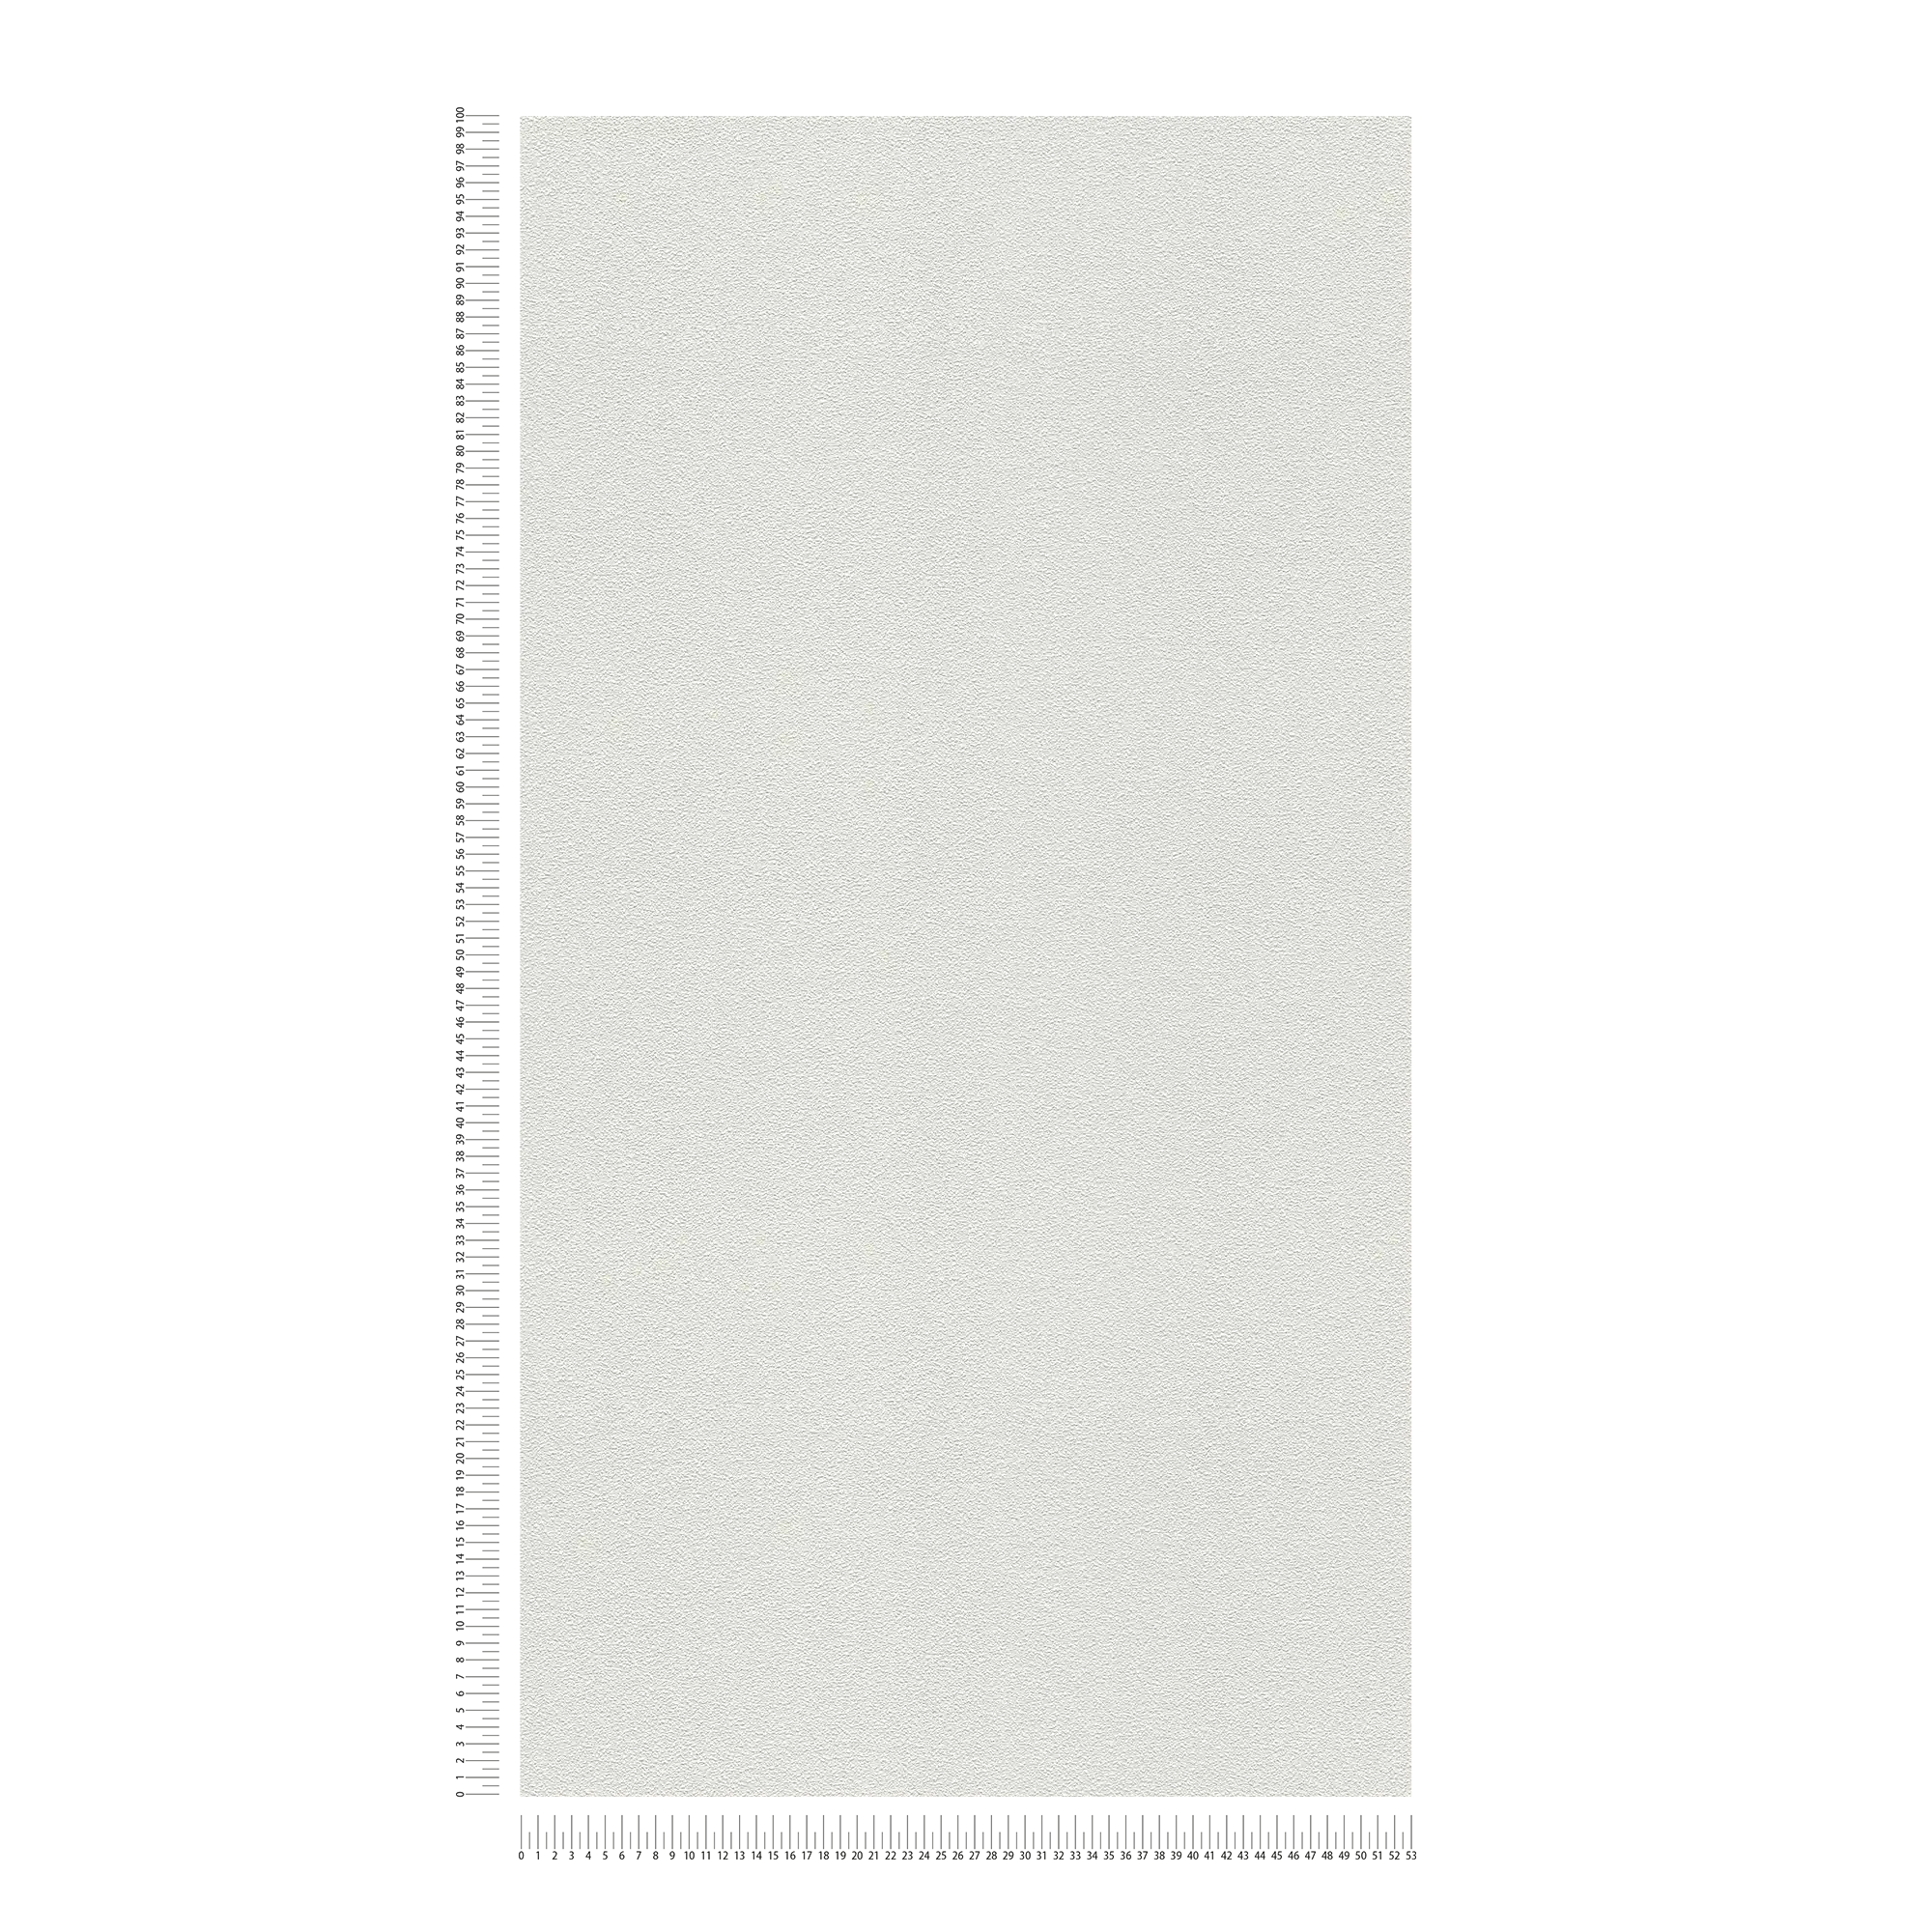             Carta da parati con struttura fine - verniciabile, bianca
        